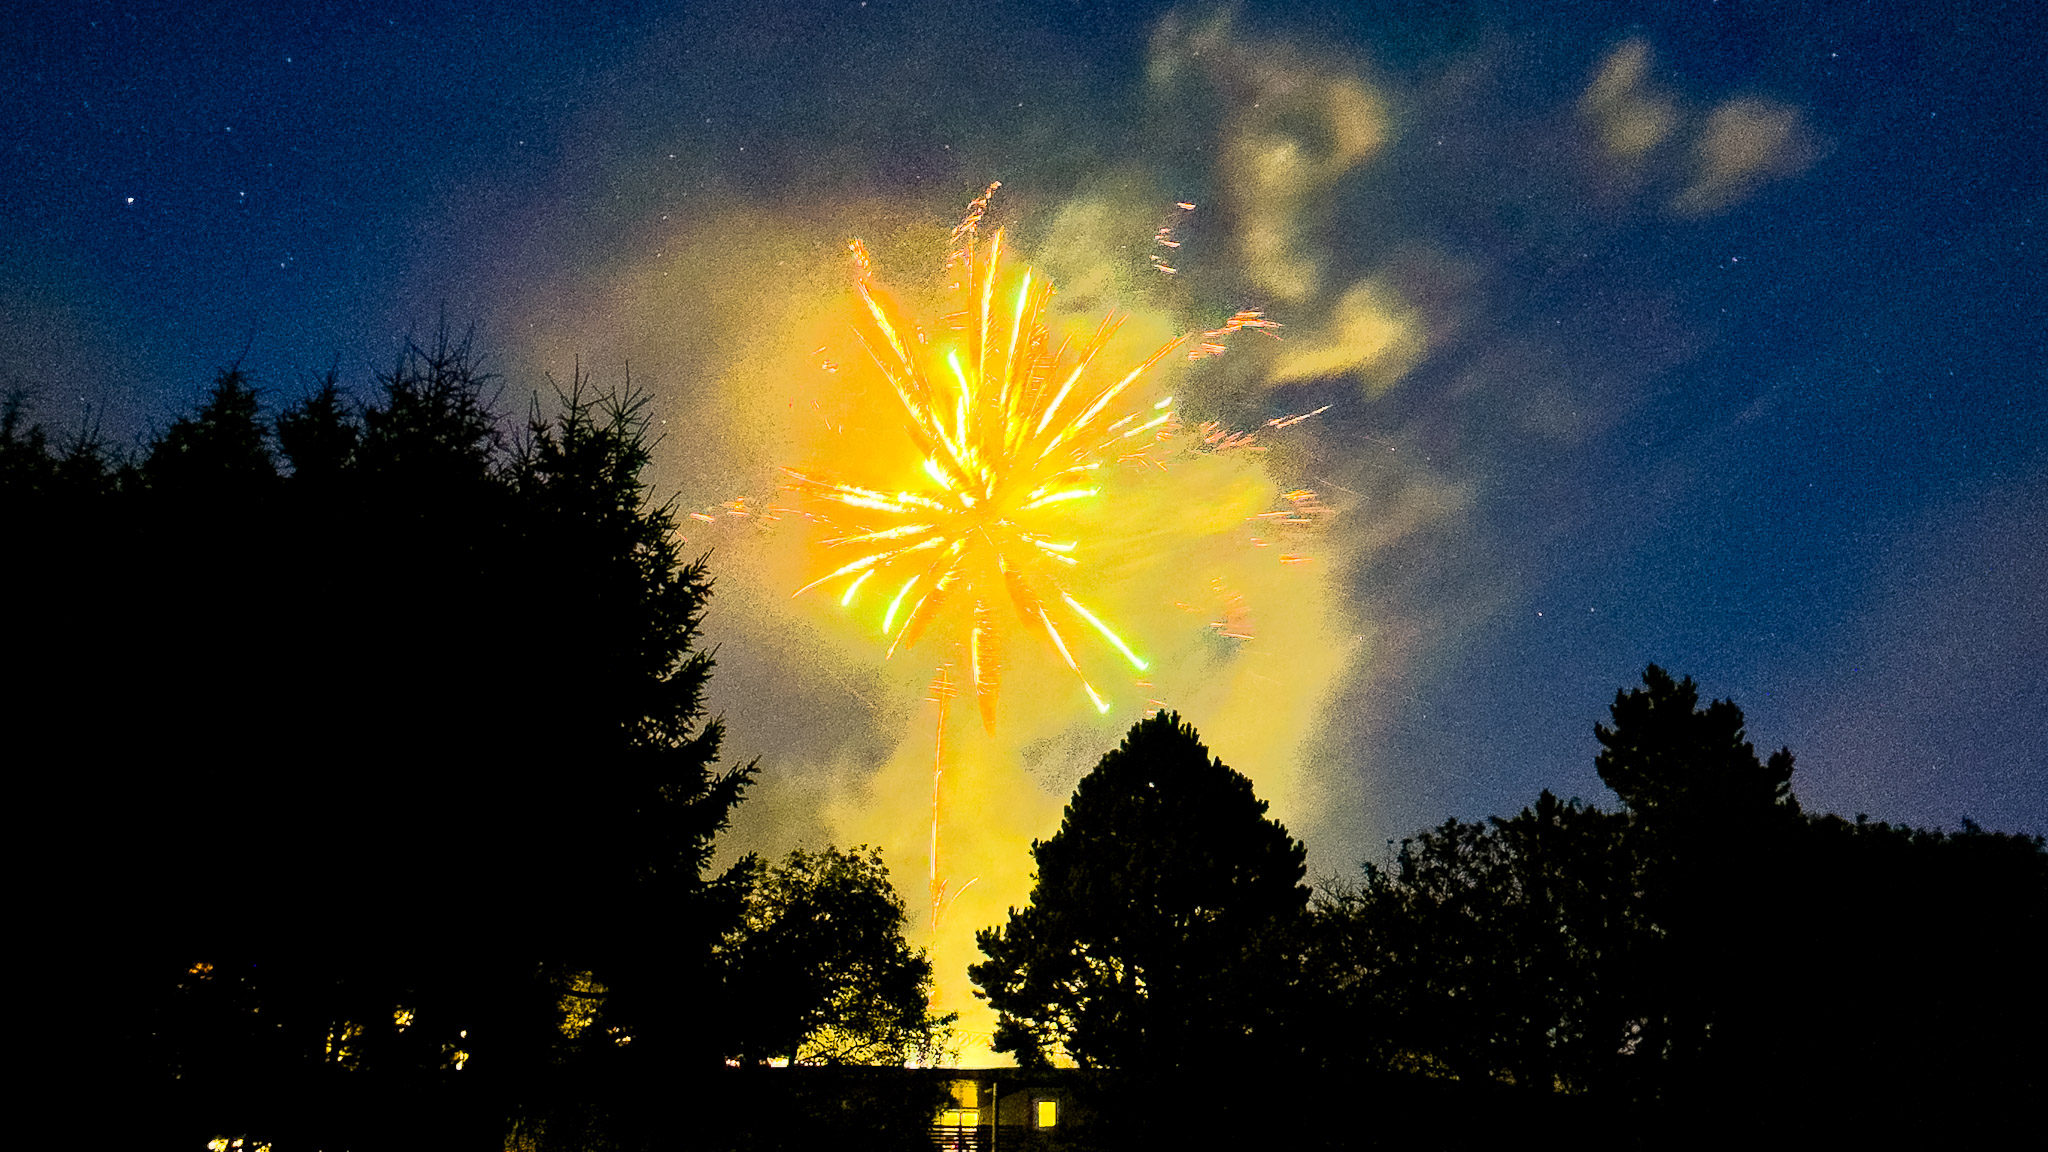 Super Besse, magnificent fireworks